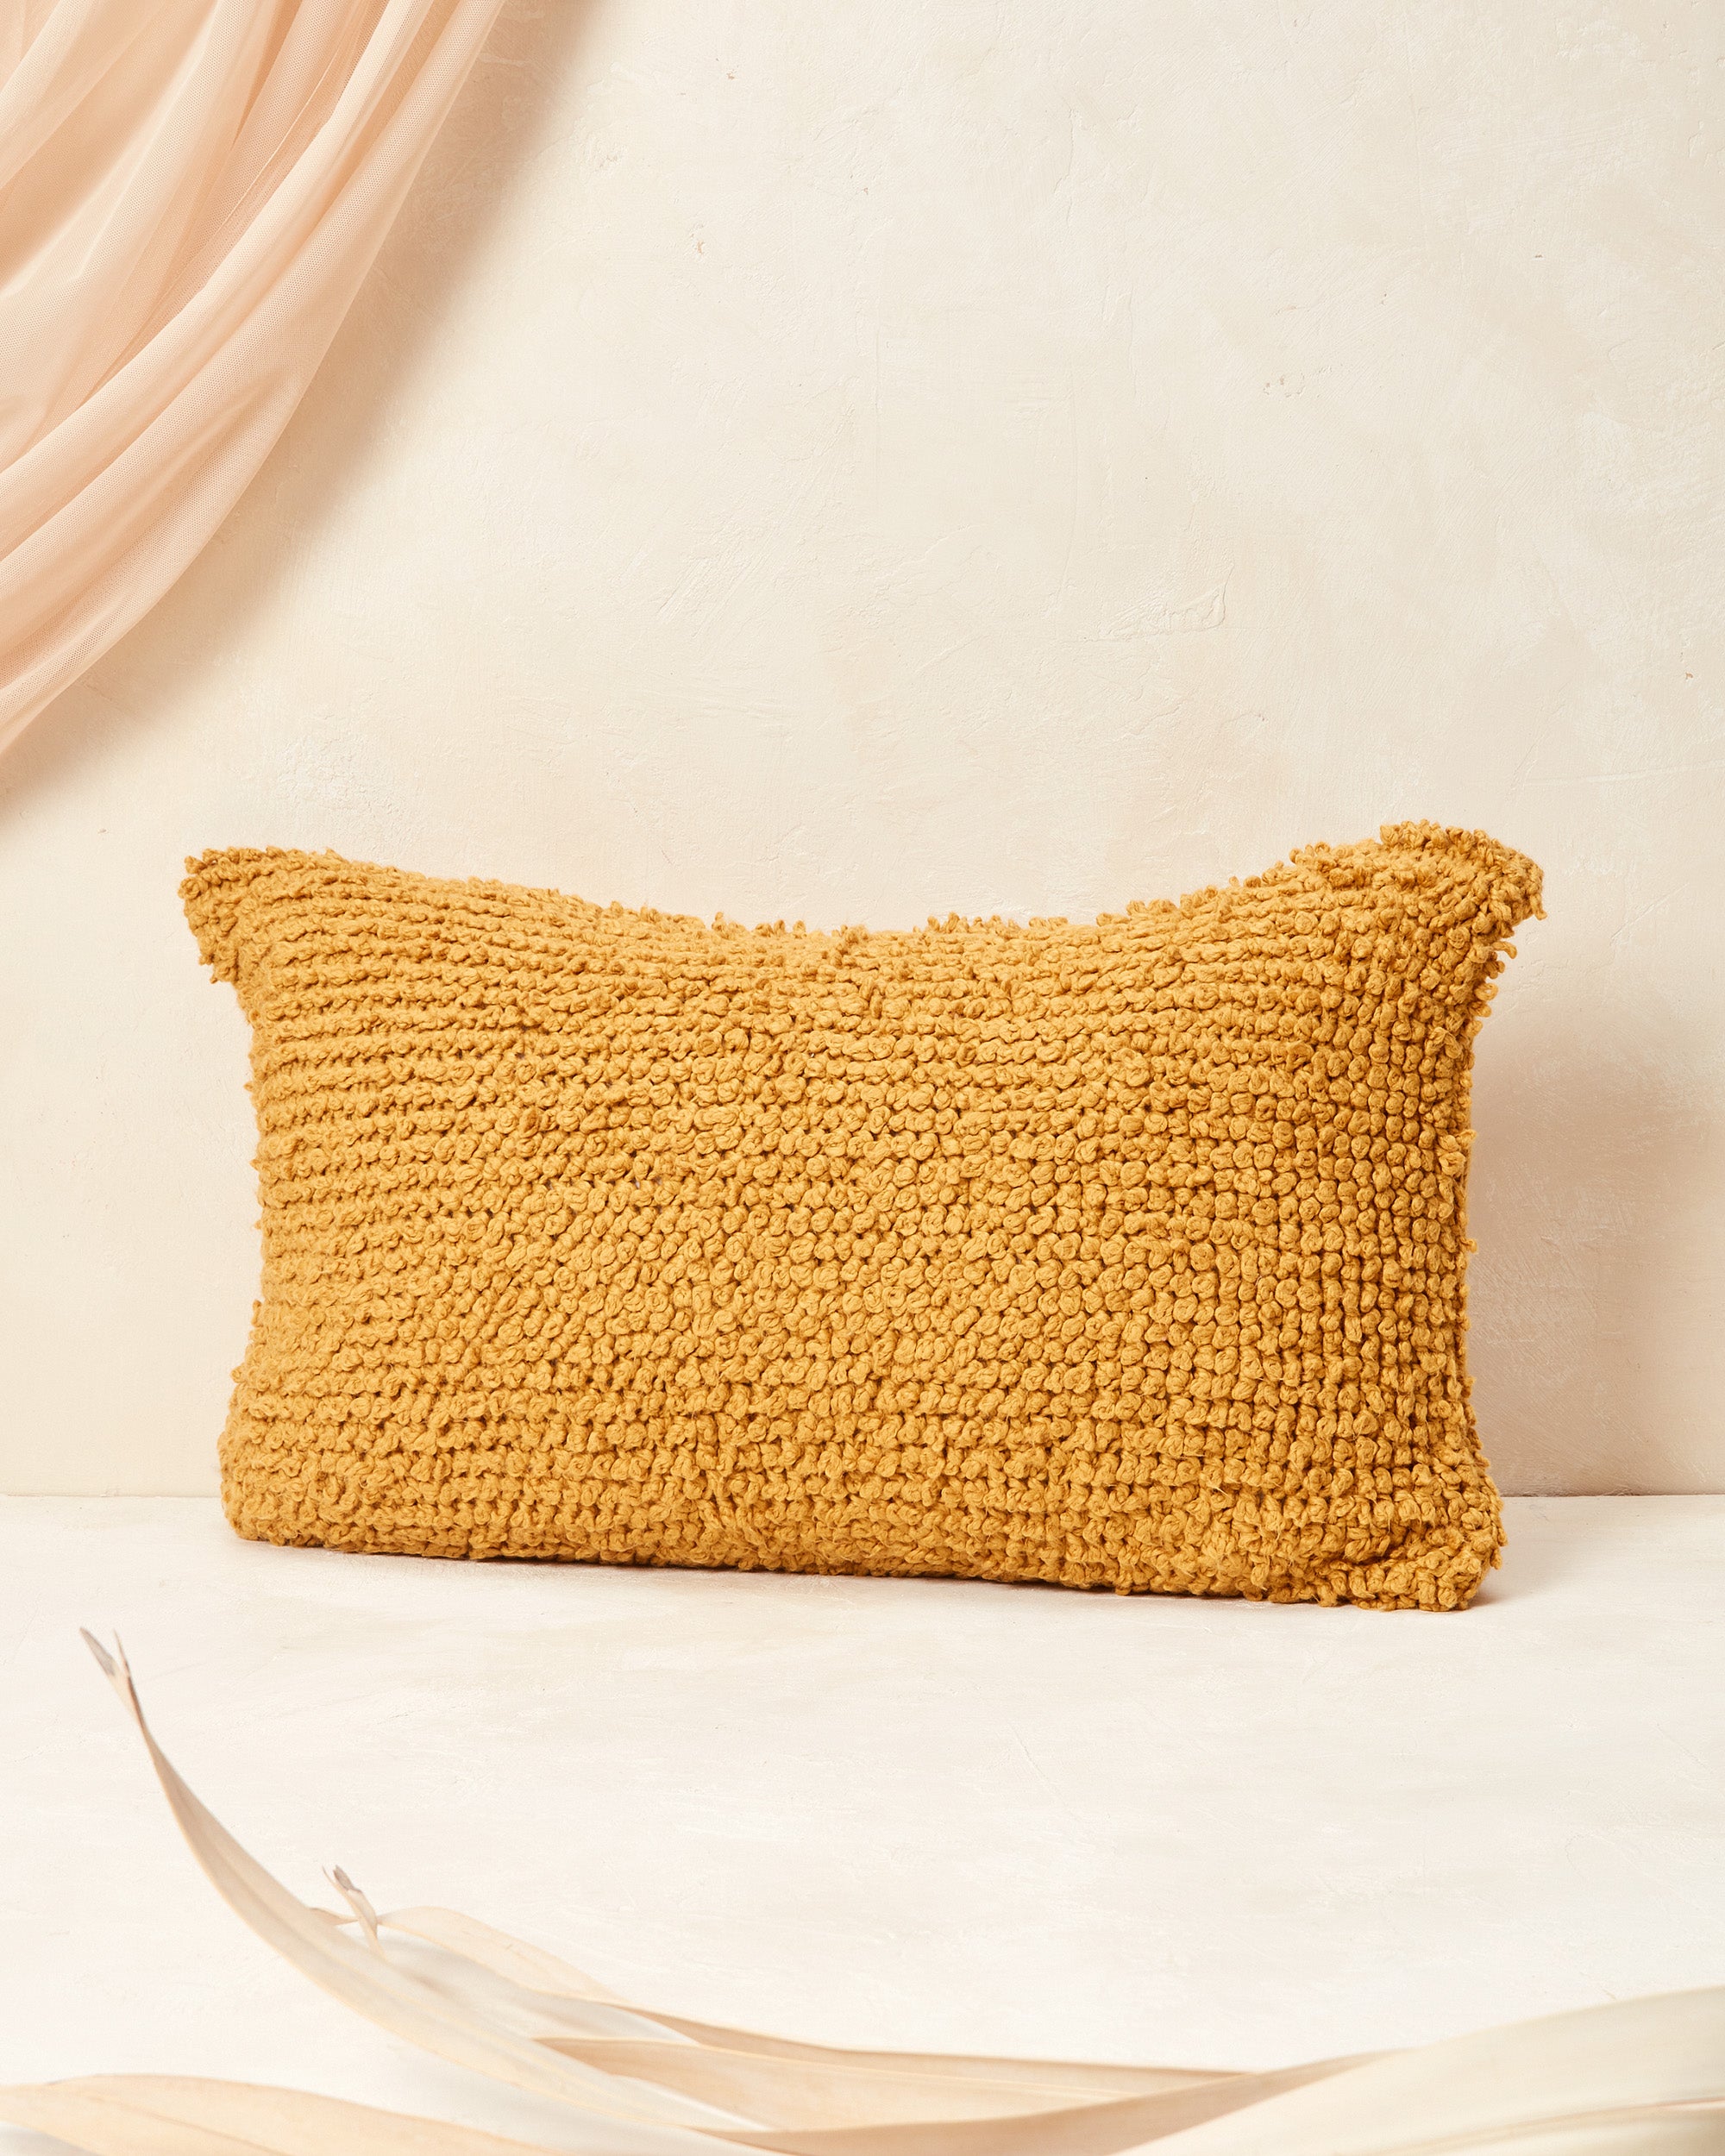 Ethically handmade, hand knit GOTS-certified organic cotton decorative throw pillow. MINNA Cloud pillow in Goldenrod.